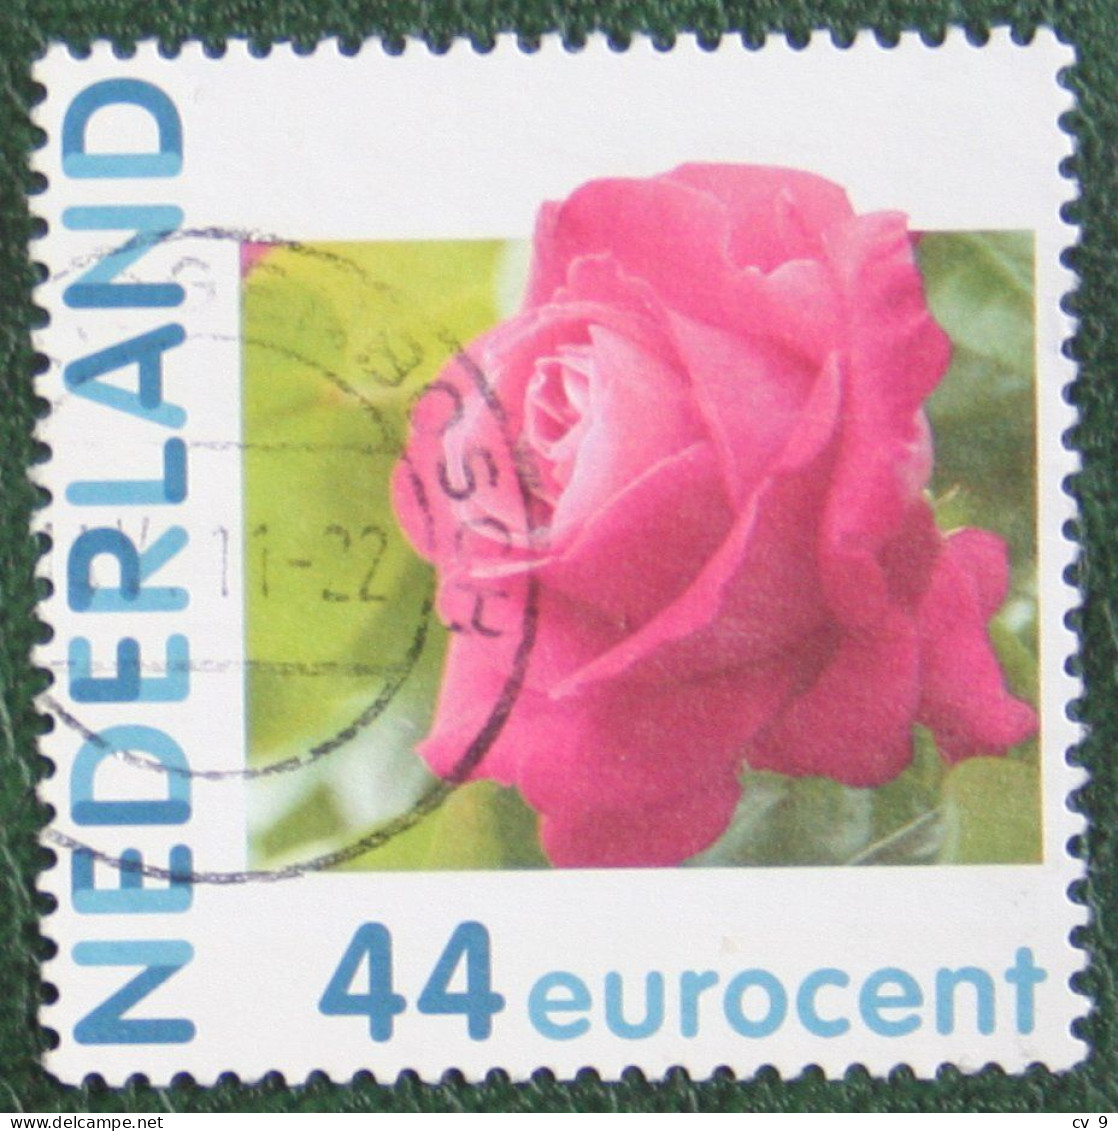 HALLMARK Rose Roos Flower Fleur Blumen Persoonlijke Zegel NVPH 2682 Gestempeld / USED / Oblitere NEDERLAND / NIEDERLANDE - Francobolli Personalizzati